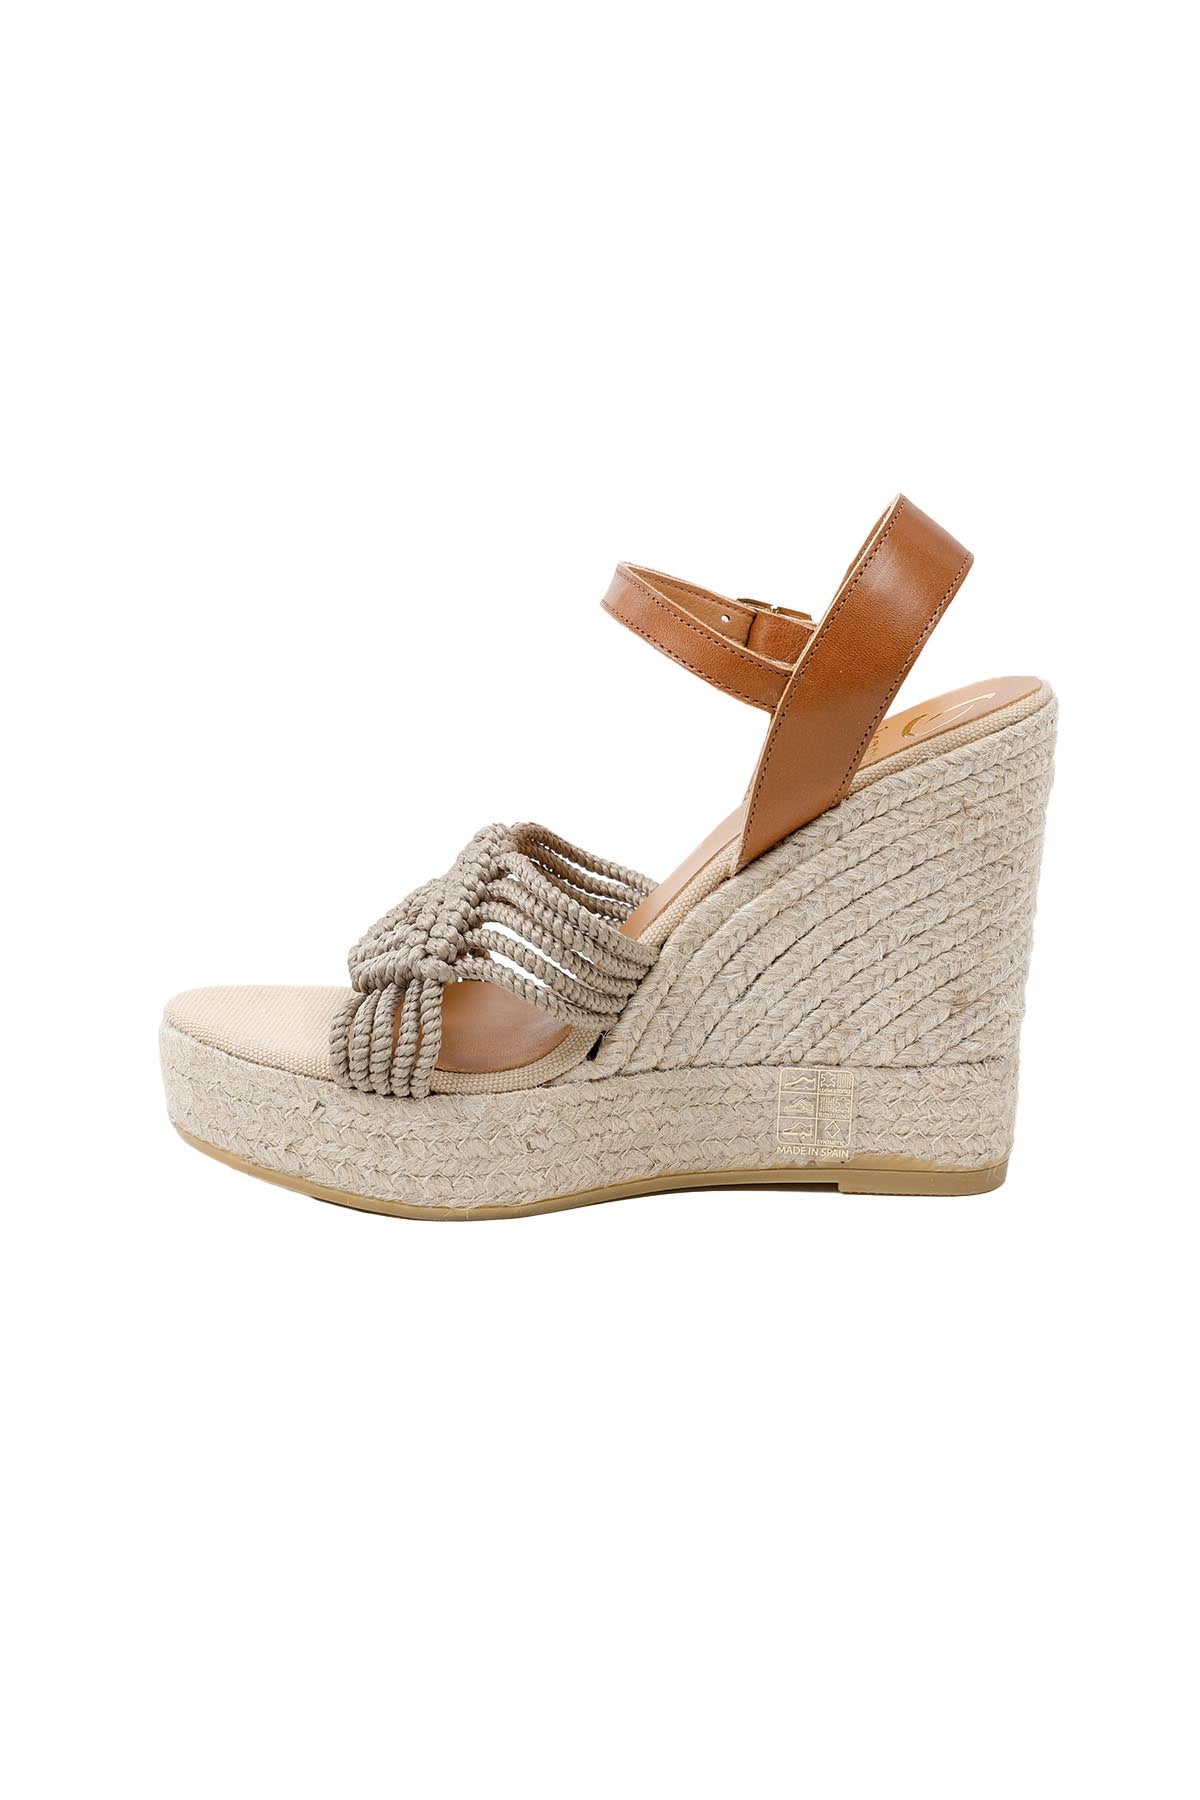 Kanna Örgü Bantlı Hasır Dolgu Topuk Sandalet-Libas Trendy Fashion Store